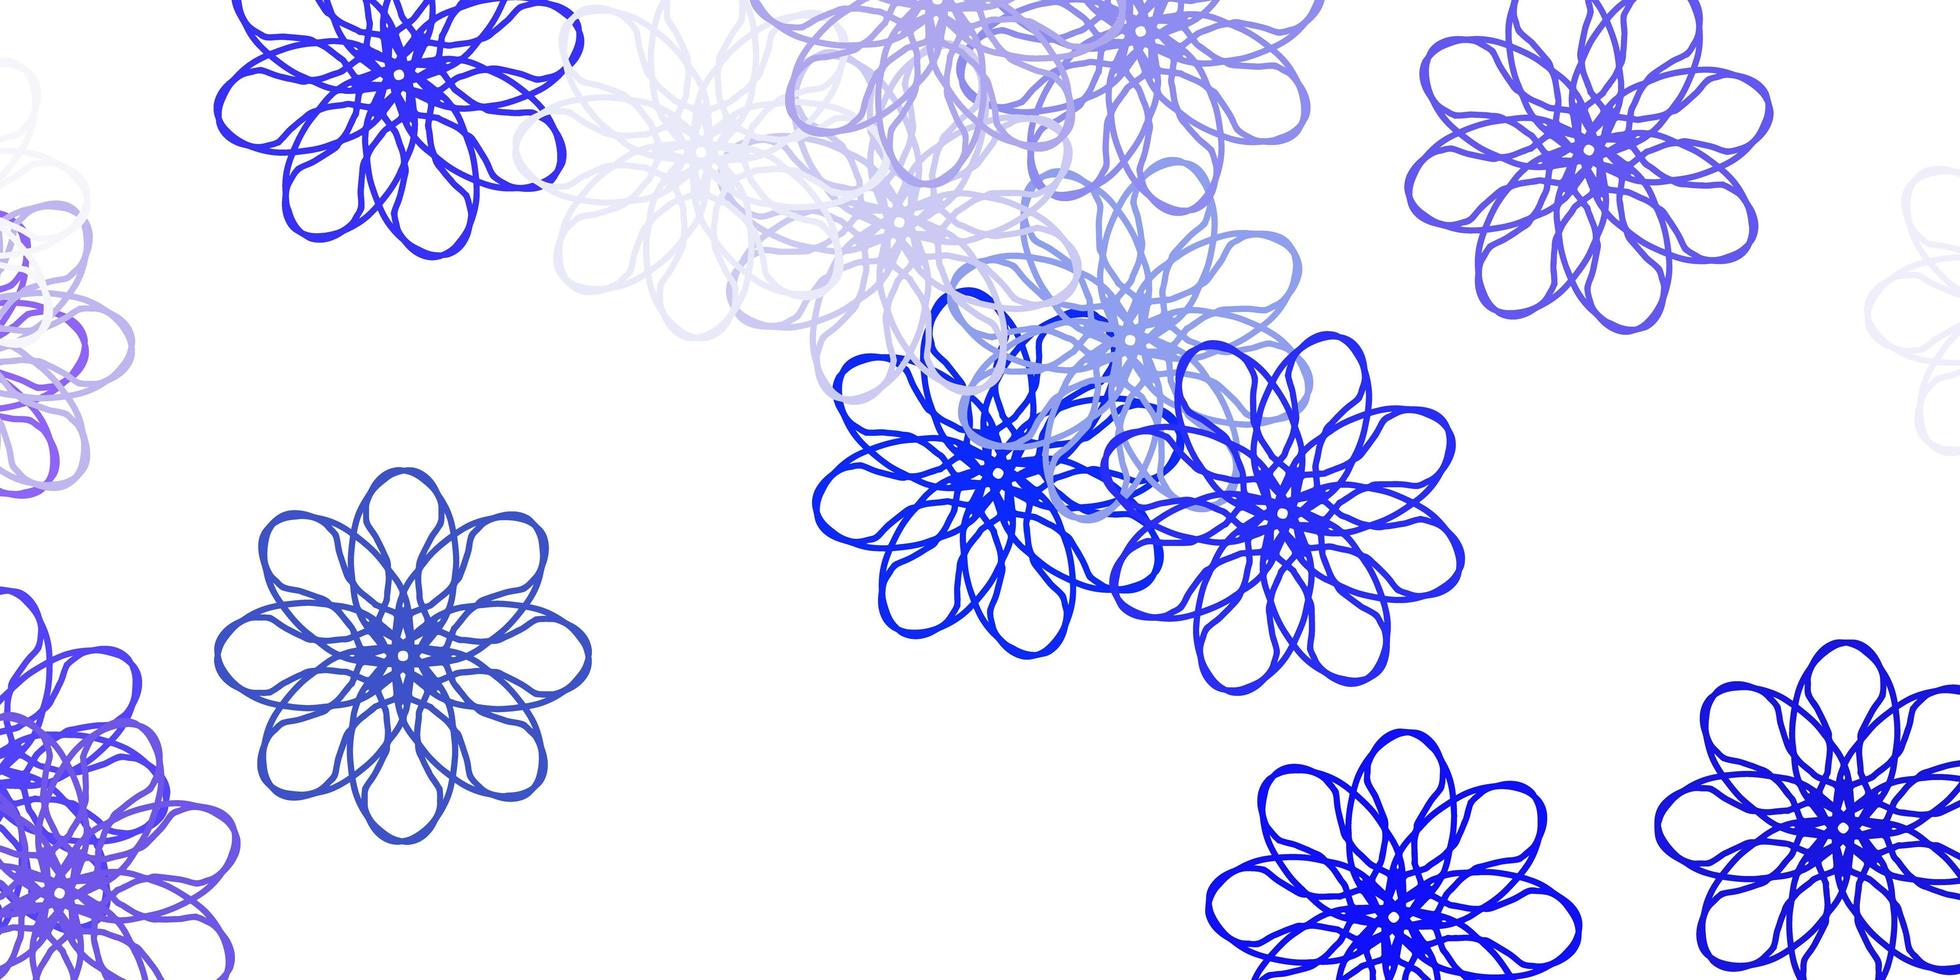 patrón de doodle de vector púrpura claro con flores